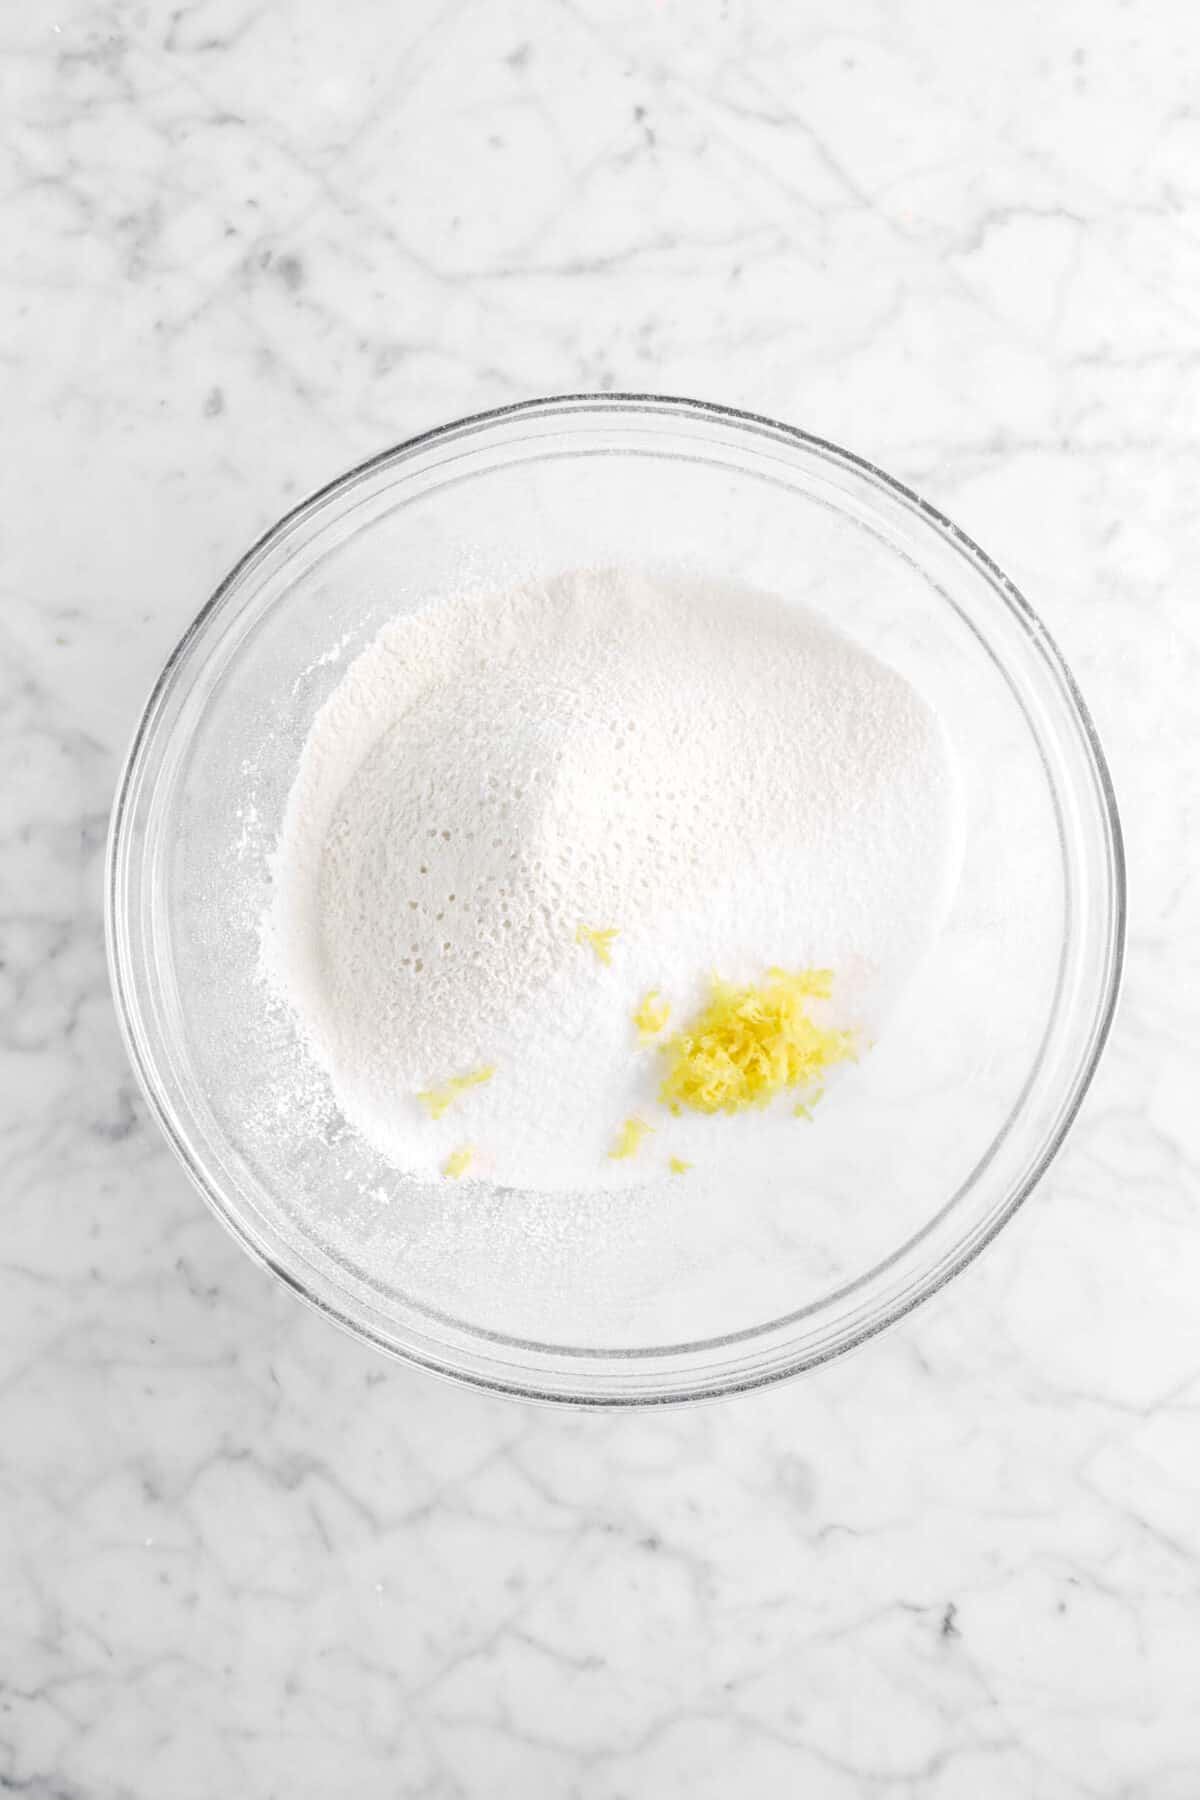 lemon zest added to dry ingredients